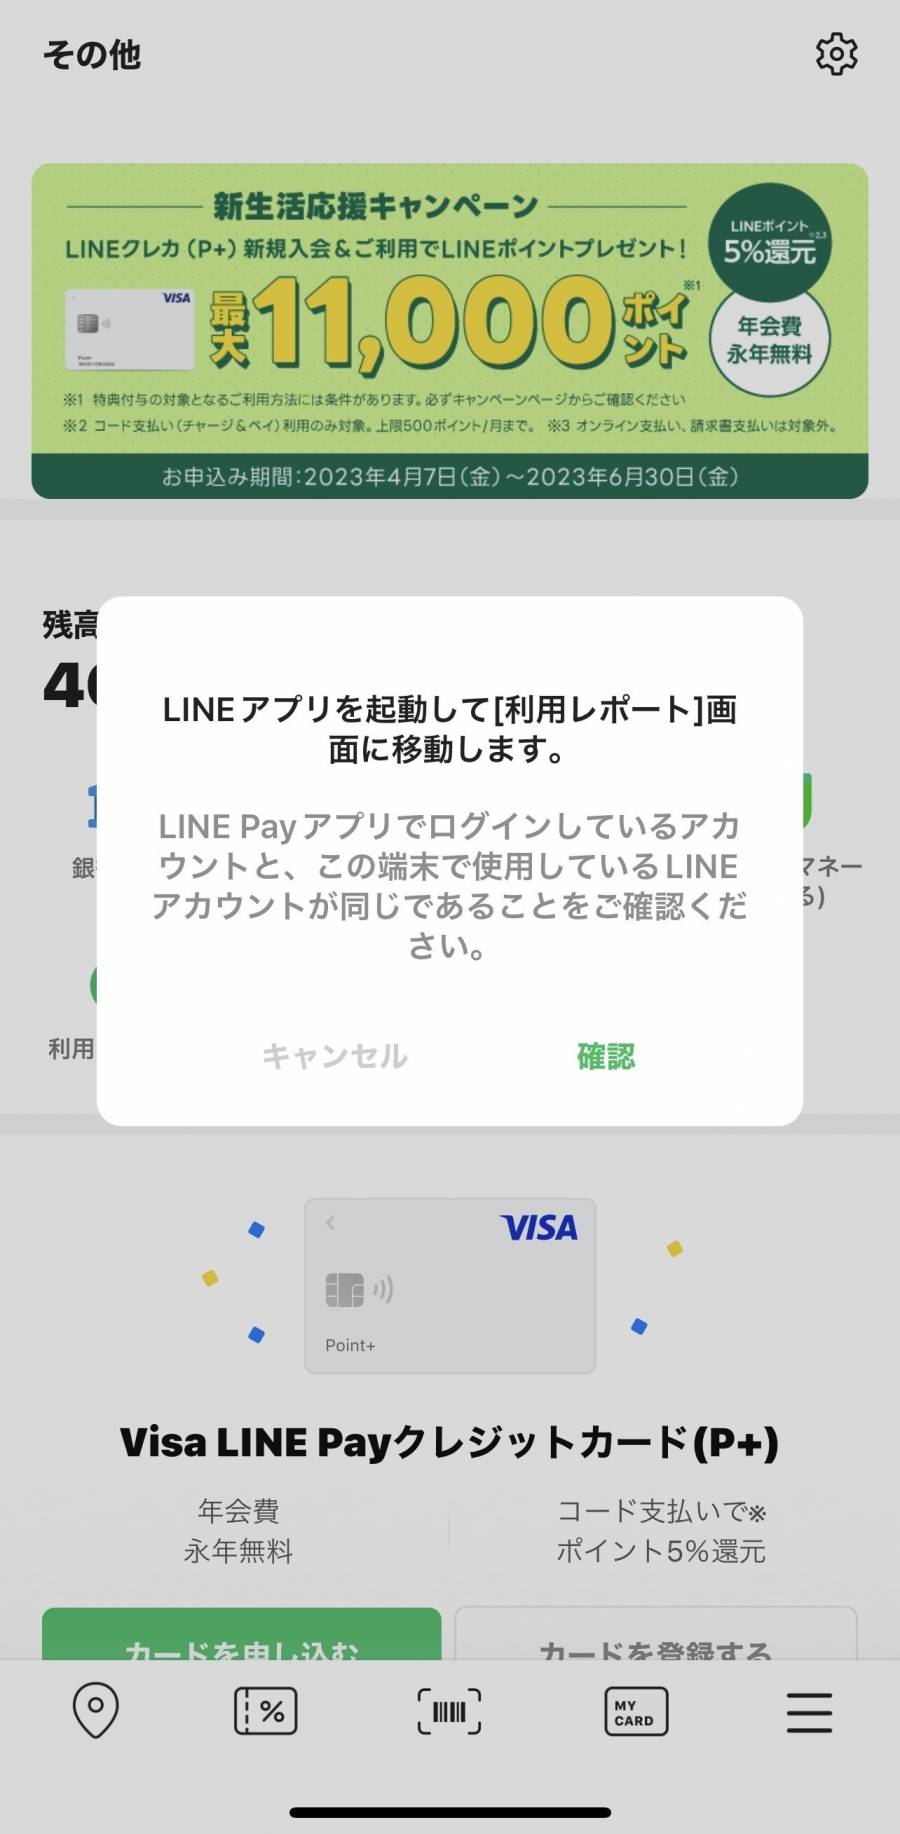 LINEPayアプリでの残高確認